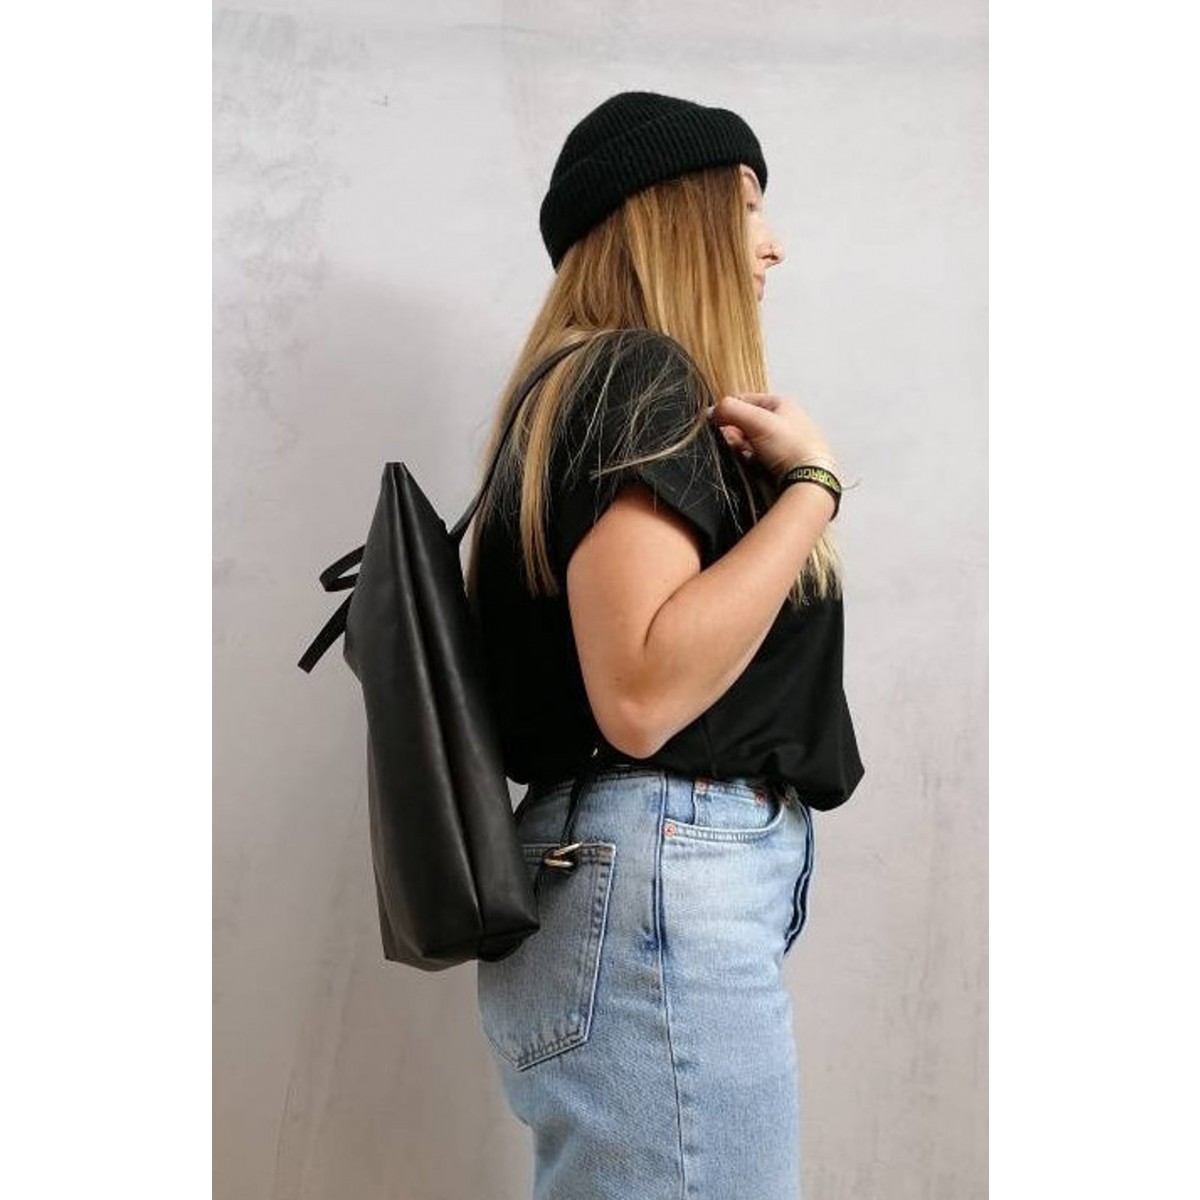 Minimalistischer Lederrucksack // Damen Rucksack // schwarzer Lederrucksack // black leather backpack // minimal 